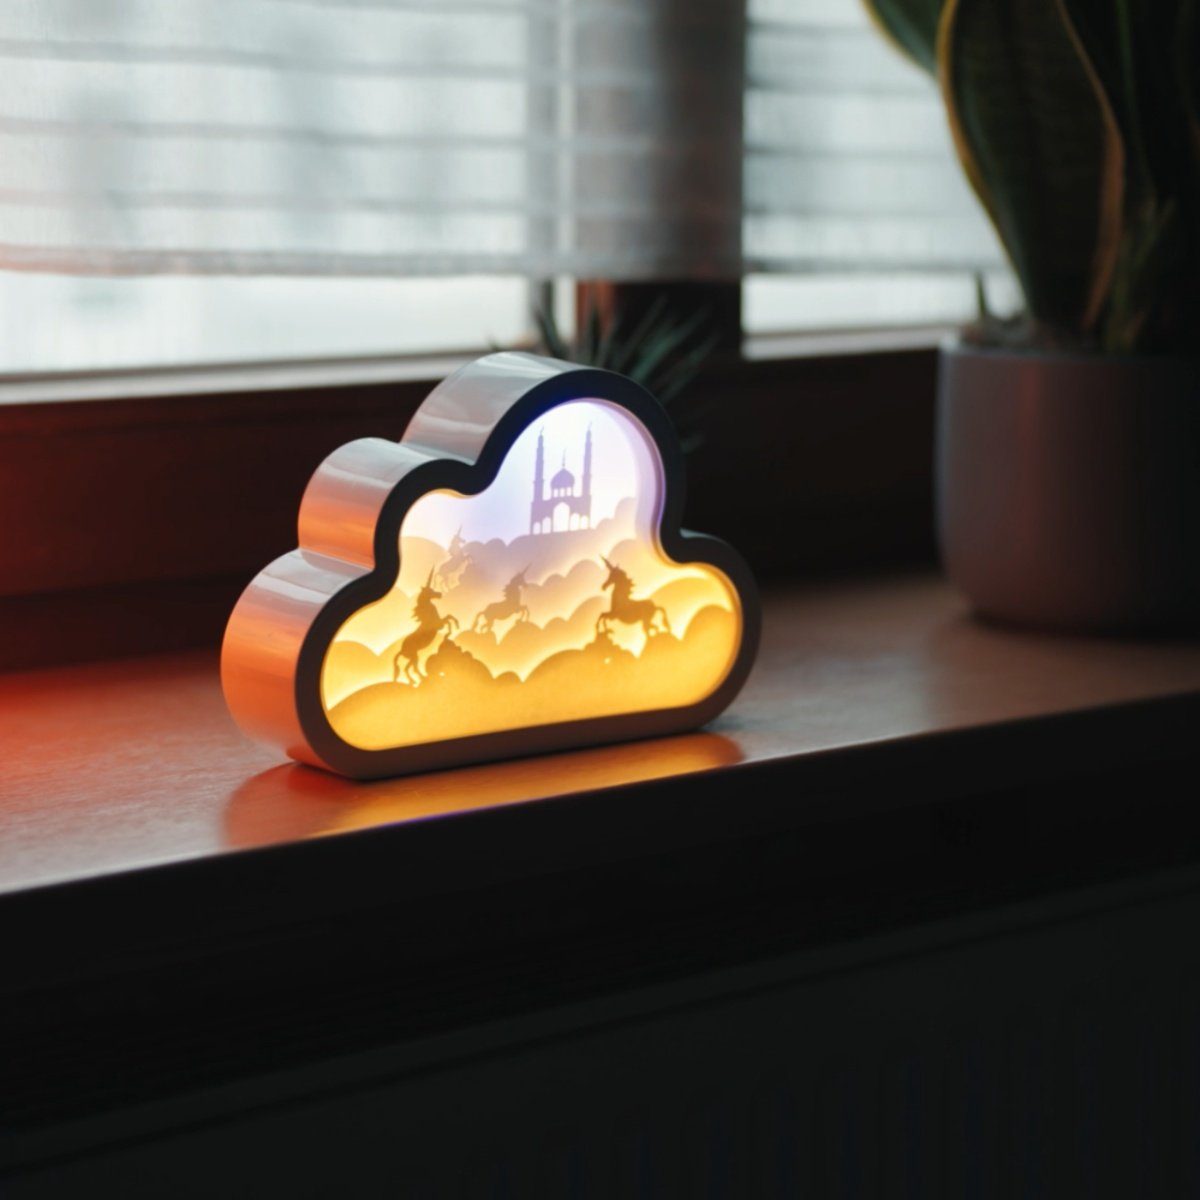 CiM LED Lichtbox Fantasy, kabellose CLOUD integriert, 3D LED Nachtlicht, fest Papercut Dekoration Wohnaccessoire, Shadowbox, Warmweiß, 20x4x13cm, 